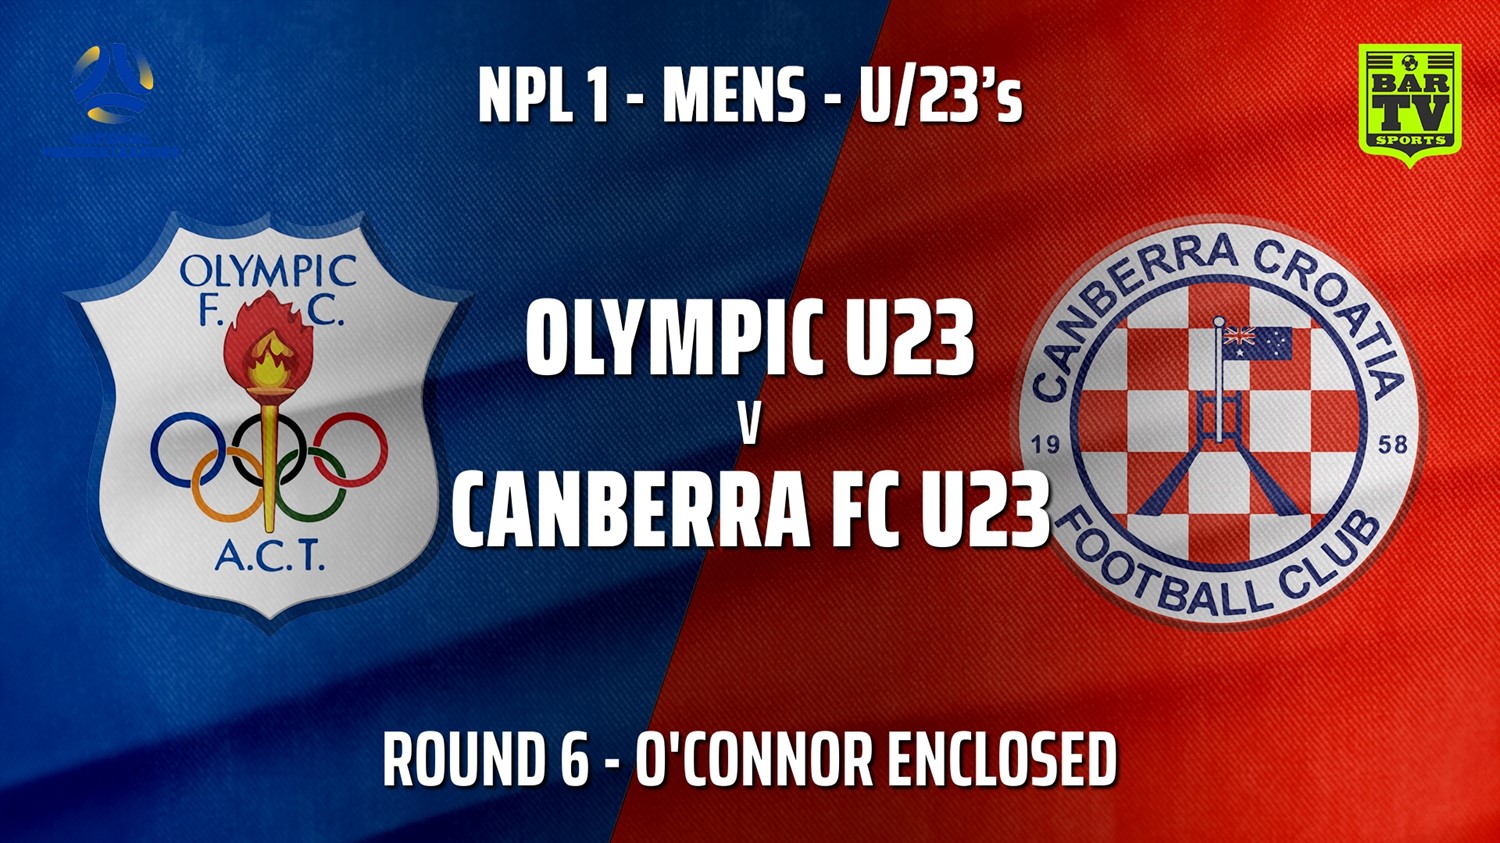 210515-NPL1 U23 Capital Round 6 - Canberra Olympic U23 v Canberra FC U23 Minigame Slate Image